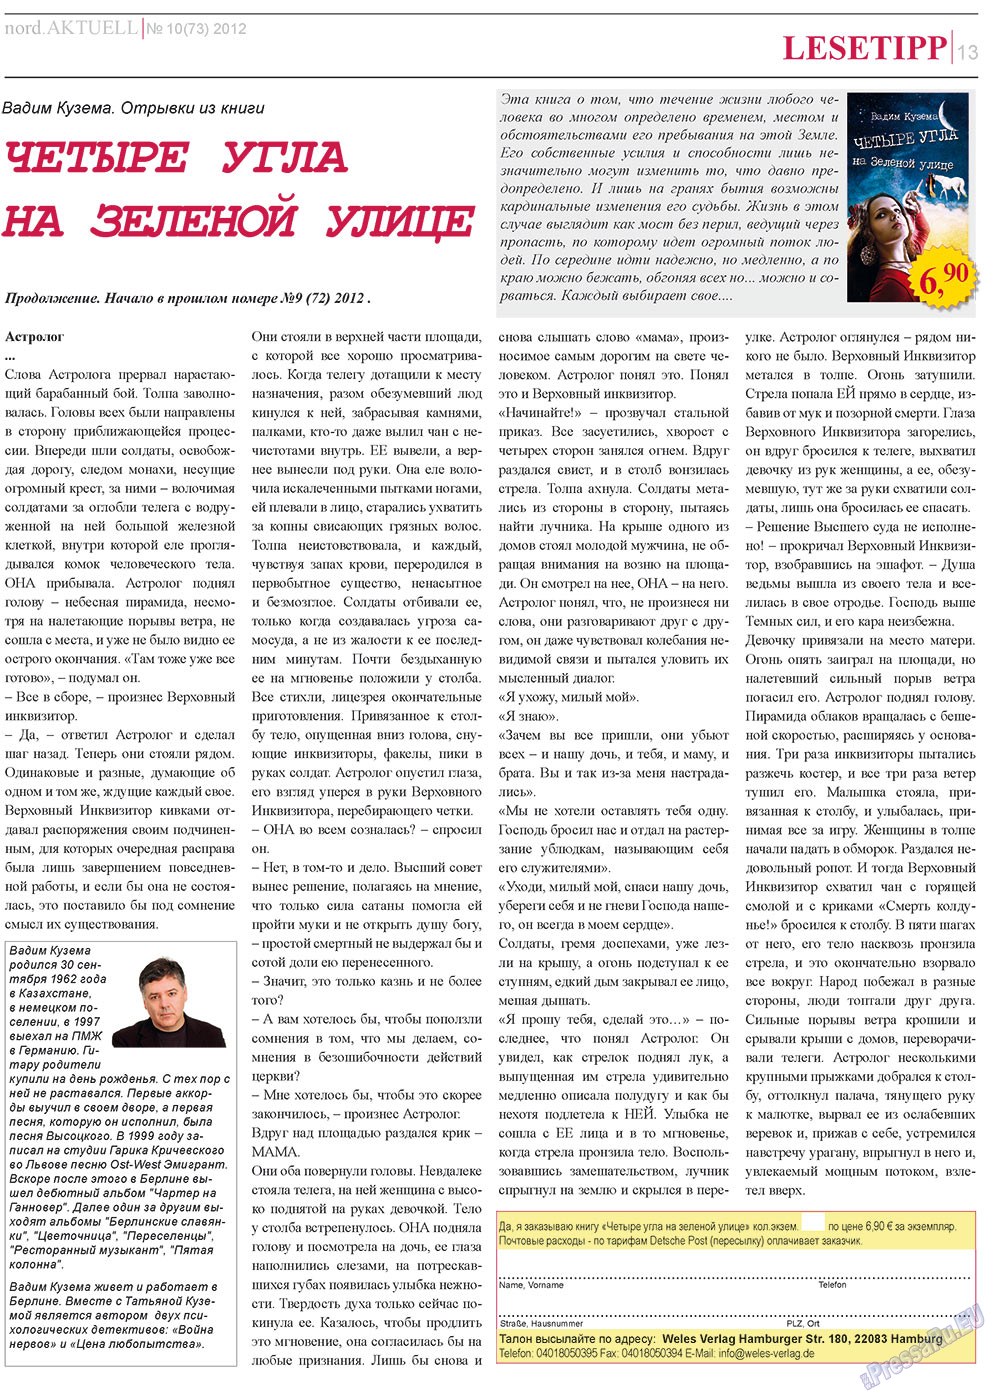 nord.Aktuell, газета. 2012 №10 стр.13